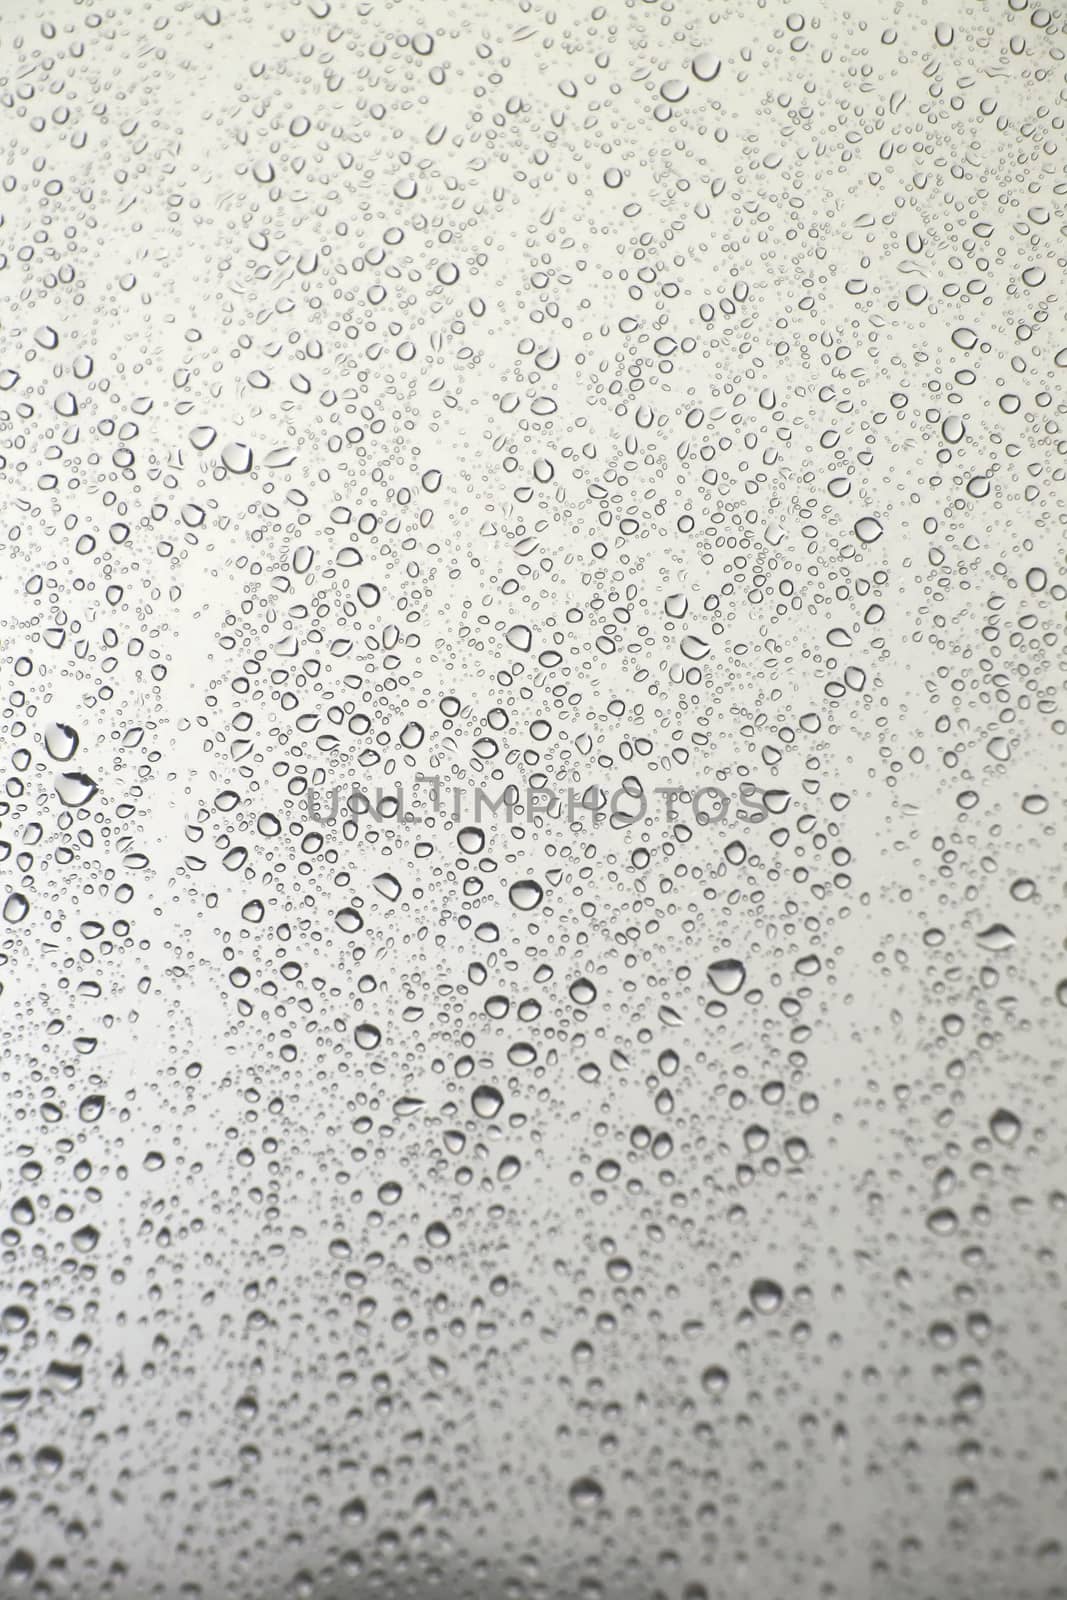 Drops of rain on the window. by sergpet